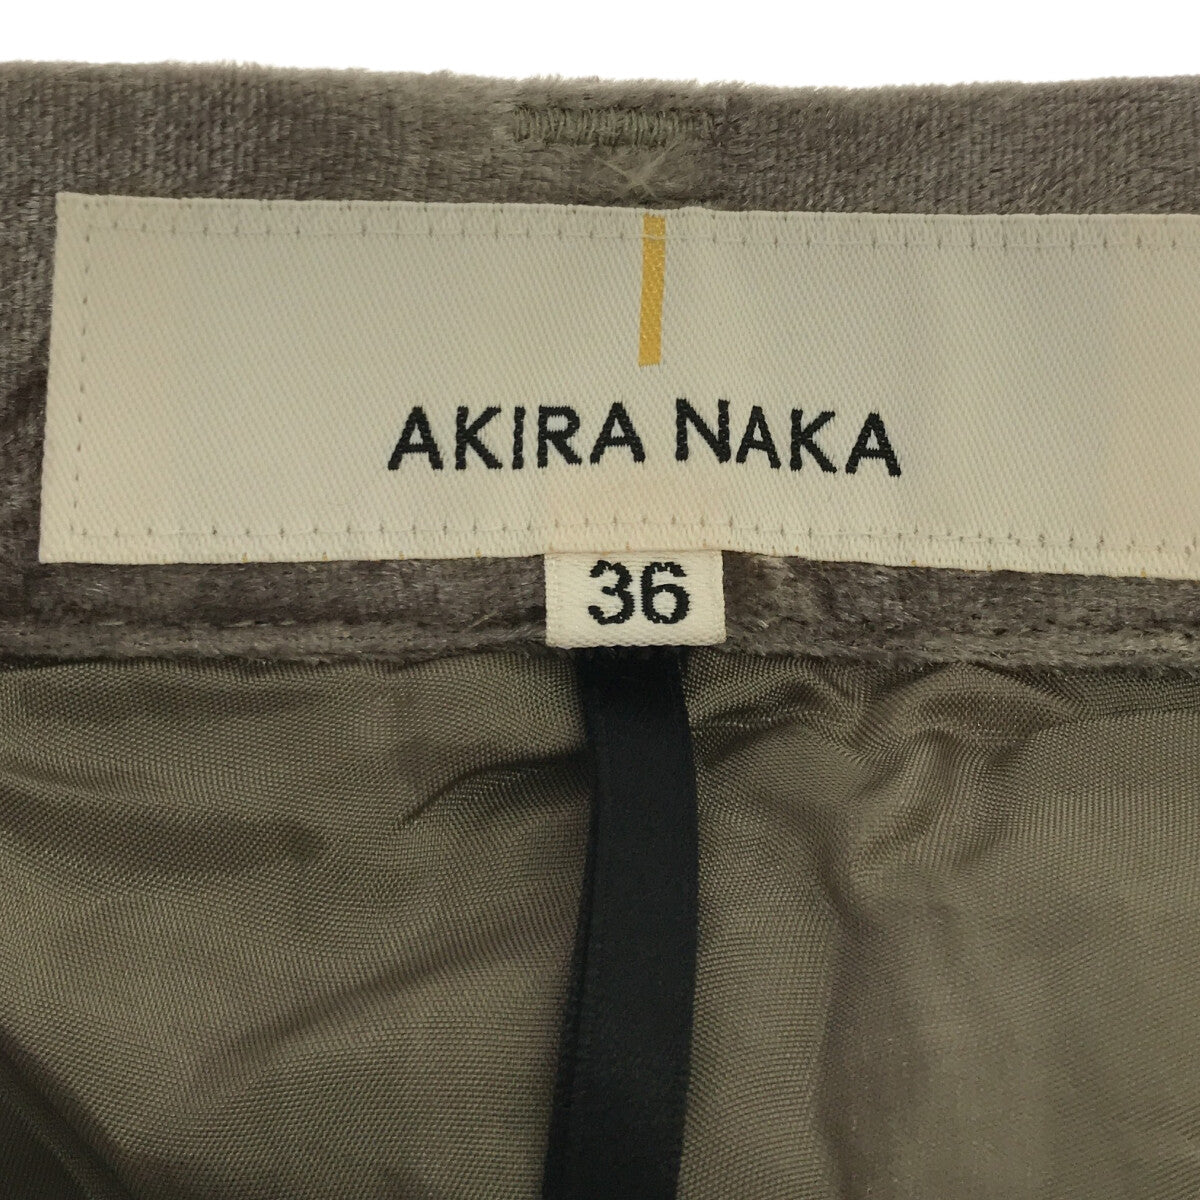 AKIRANAKA / アキラナカ | アコーディオンプリーツ パンツ | 36 |